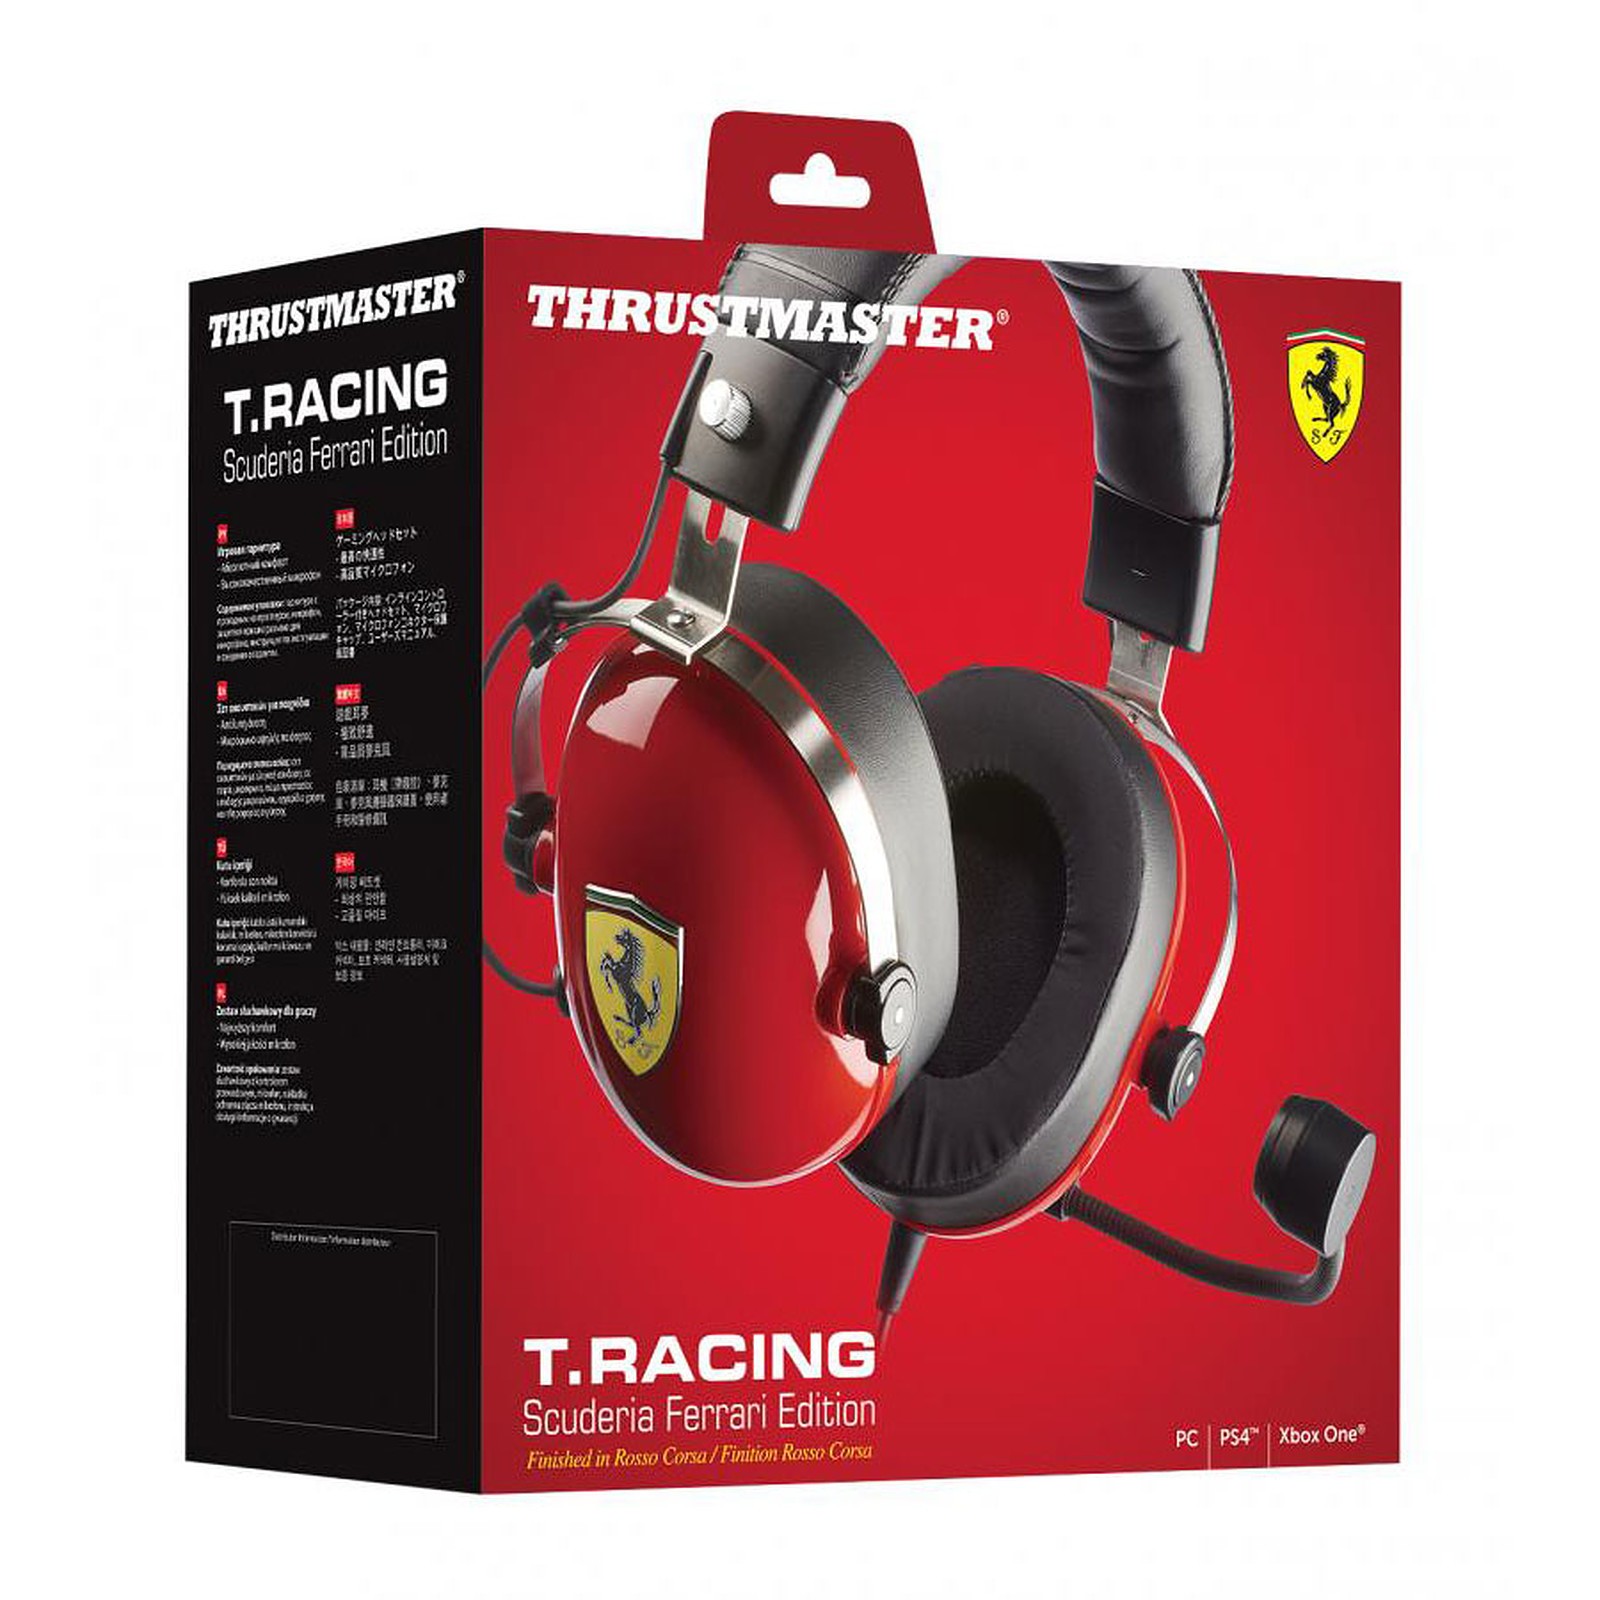 Thrustmaster T.Racing Scuderia Ferrari Edition DTS – Materiel Maroc (Pc) PC Gamer Maroc | Workstation | Tour PC | MATERIELMAROC.COM